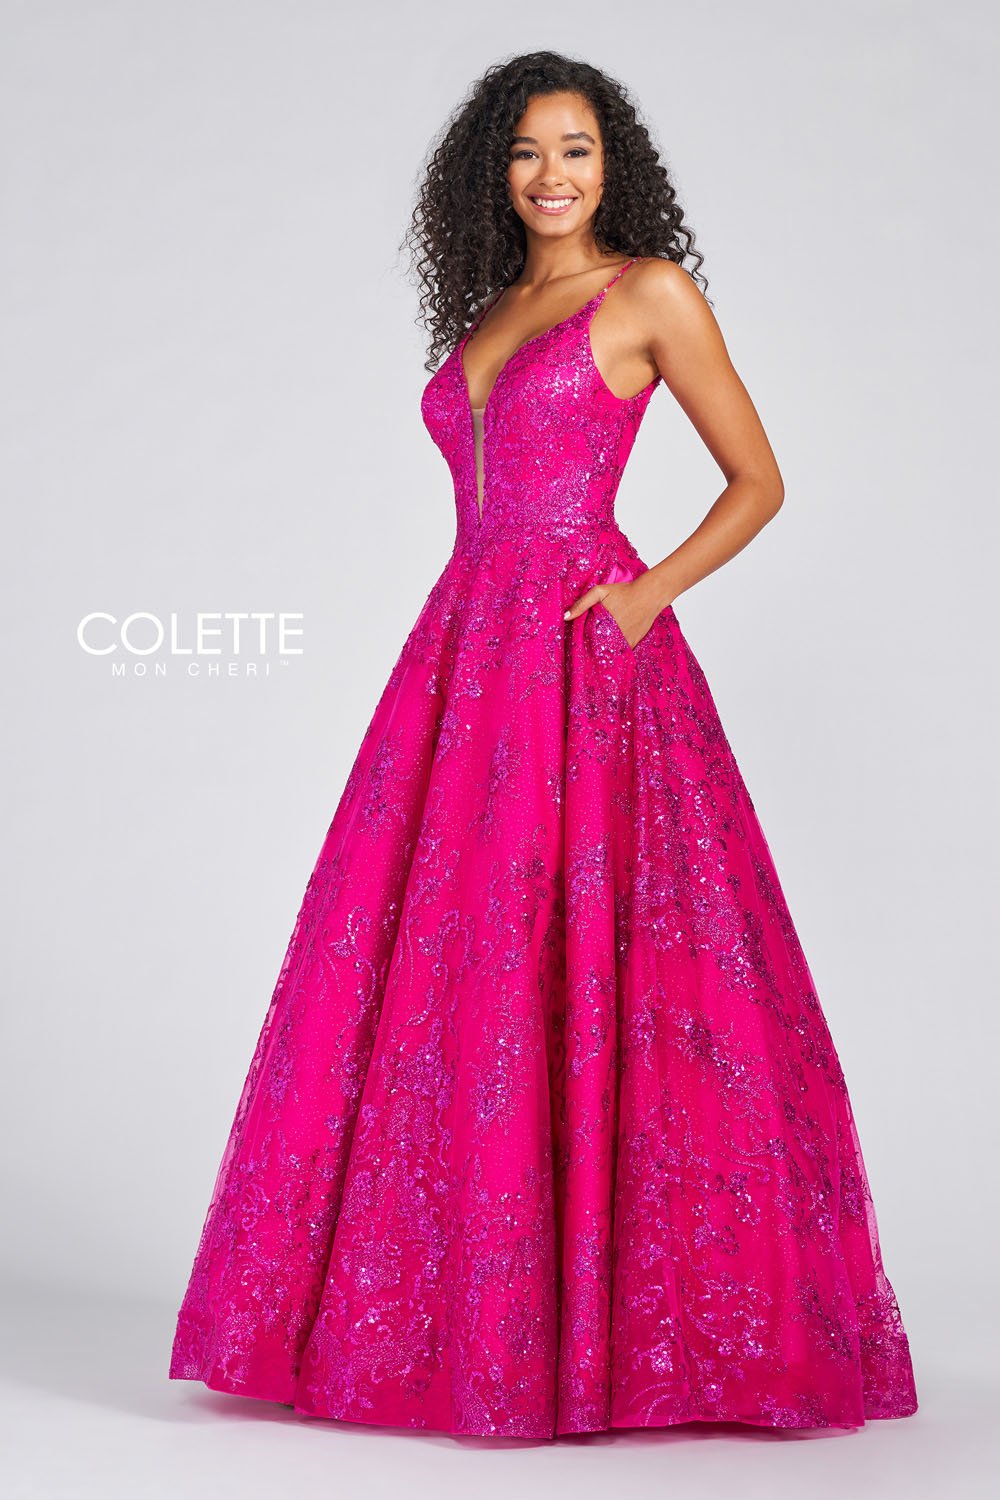 Colette CL12259 Magenta prom dresses.  Magenta prom dresses image by Colette.